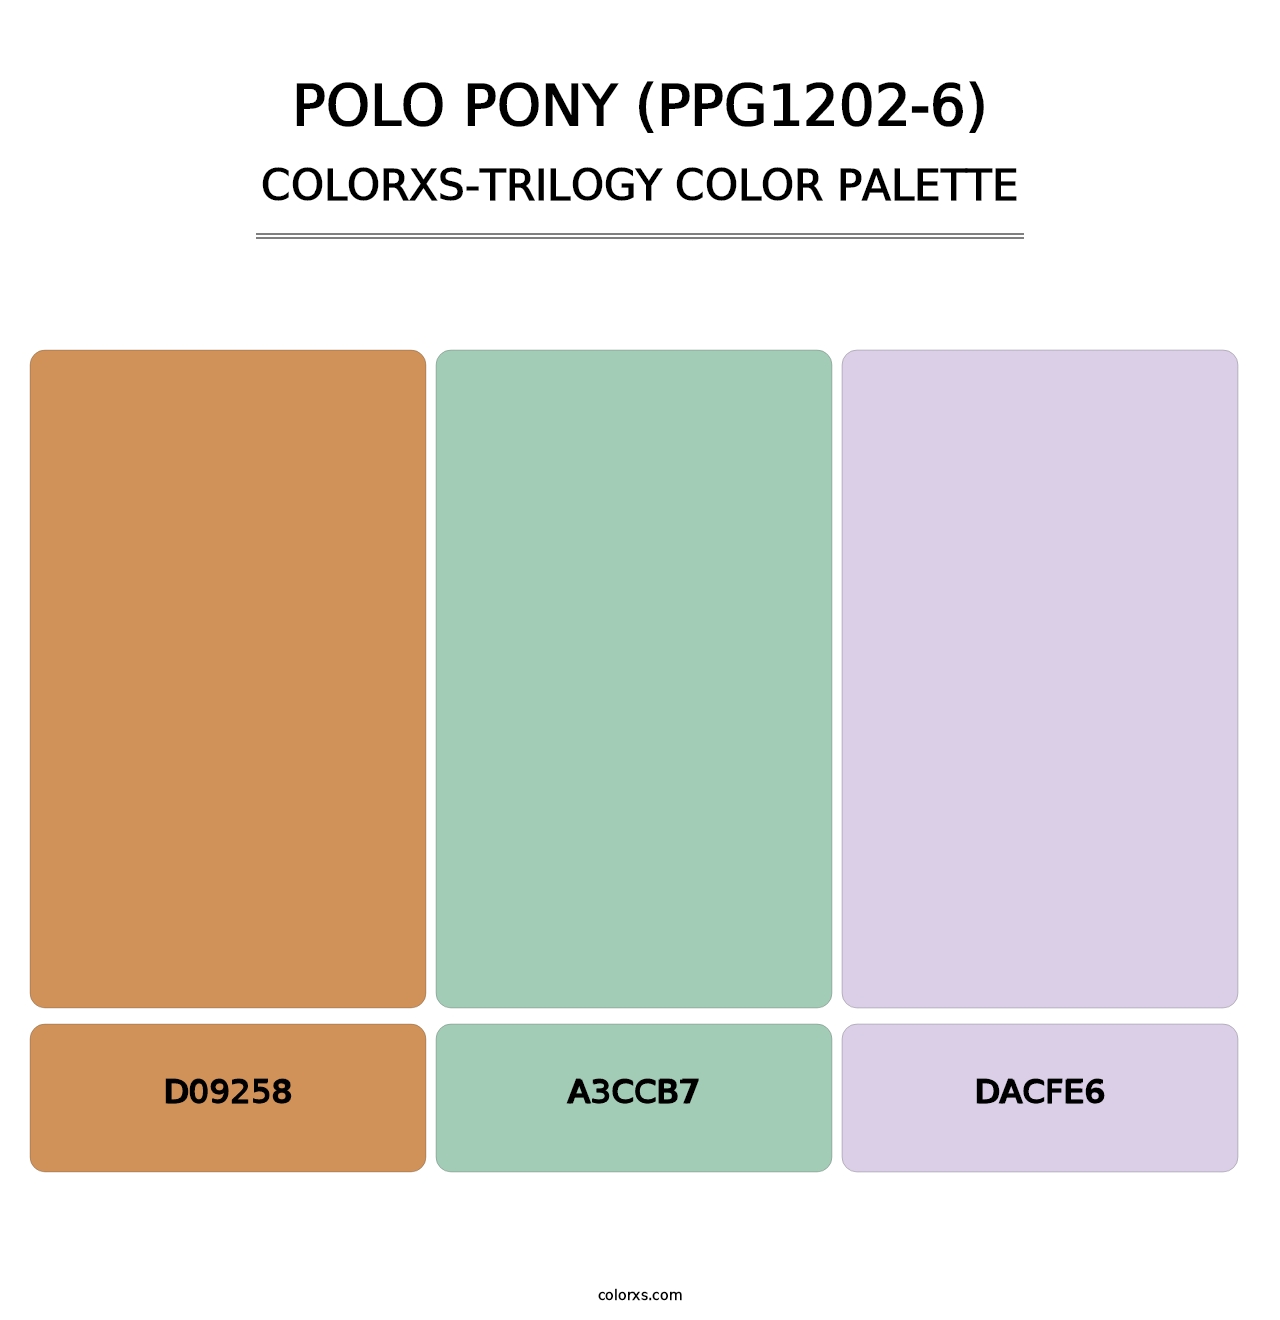 Polo Pony (PPG1202-6) - Colorxs Trilogy Palette